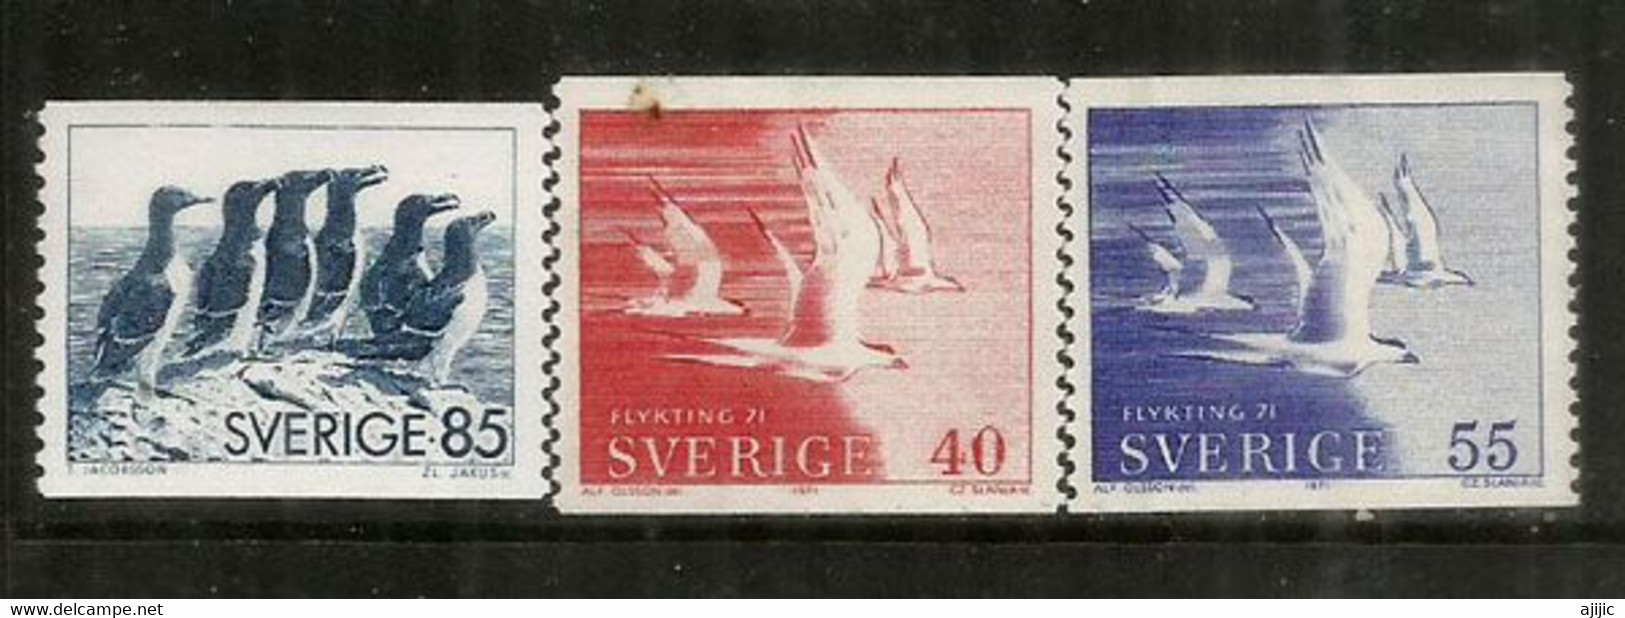 Pingouins Torda/Sternes Arctique/Arctic Terns/ Birds Refugee Relief. Sweden/ Suède.  3 Timbres Neufs ** - Faune Arctique